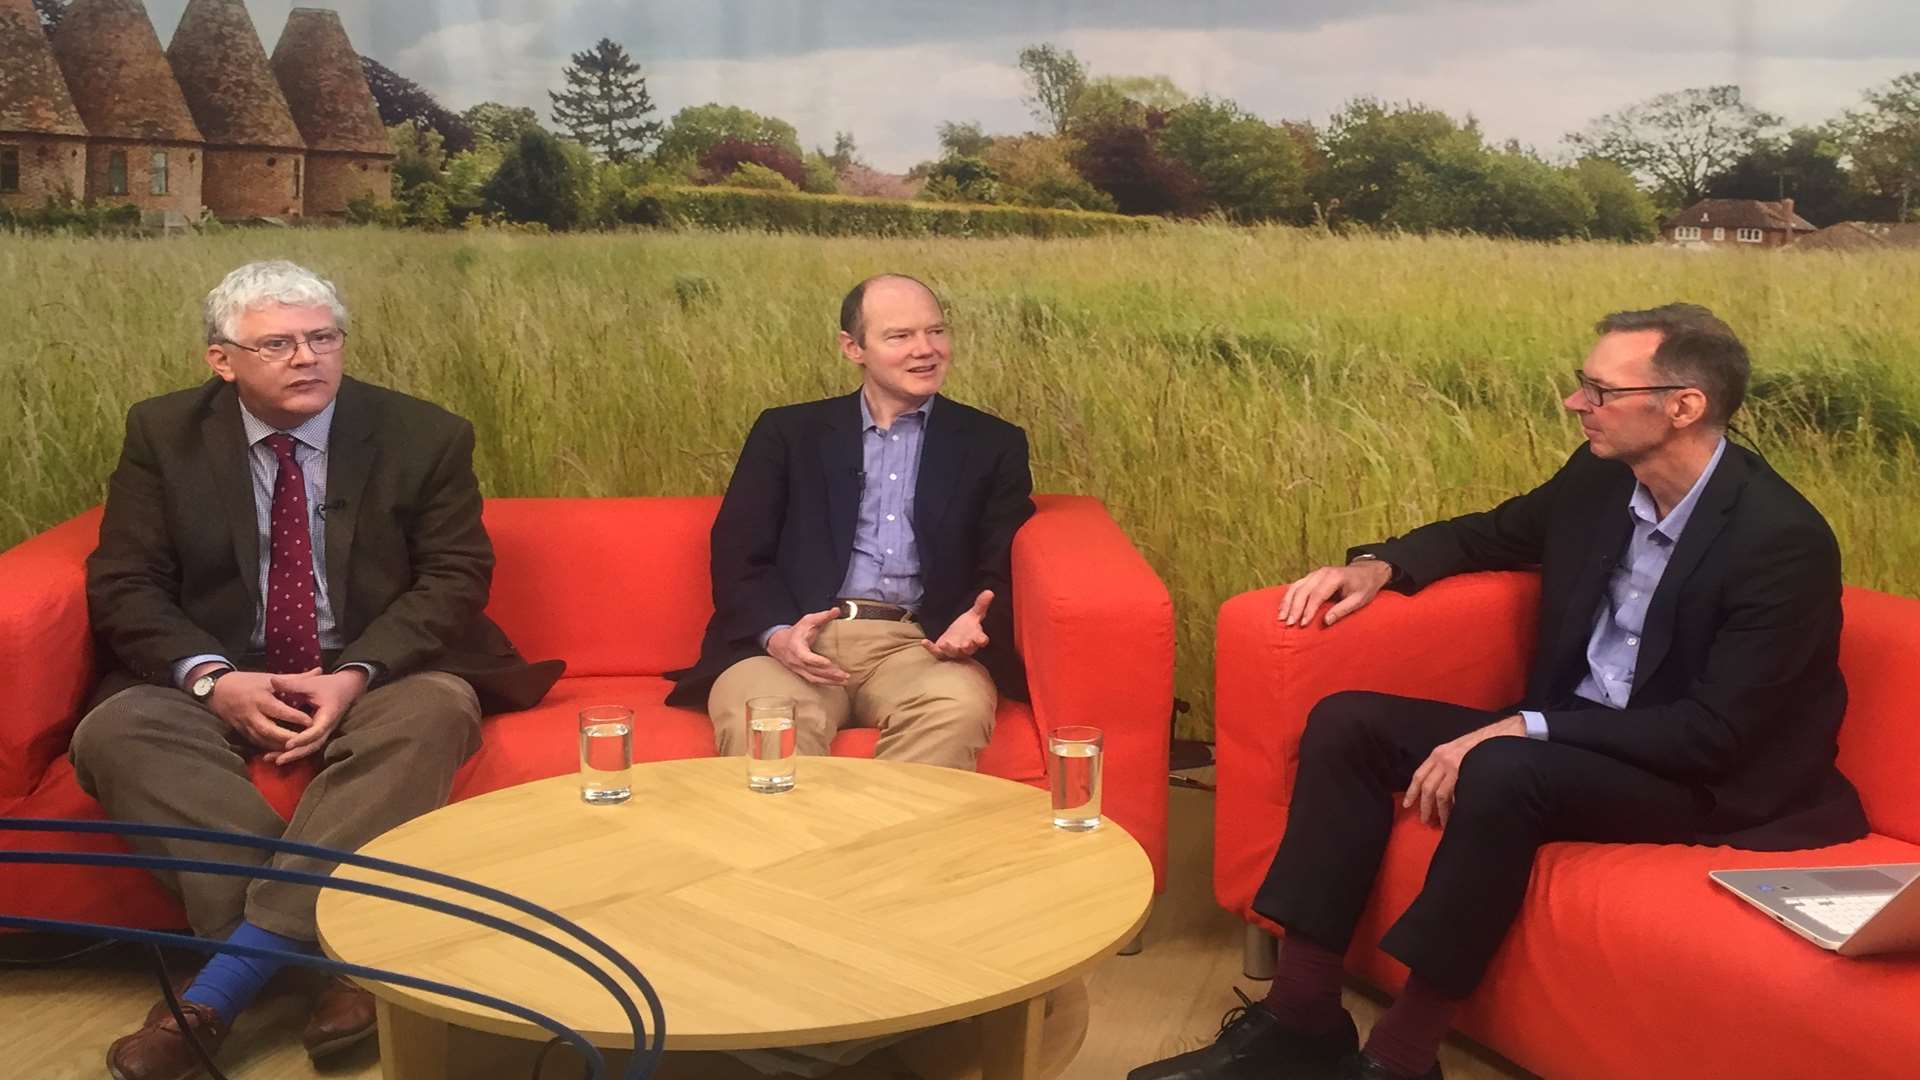 Guests Jasper Gerard and Professor Tim Luckhurst on KMTV "Paul On Politics"